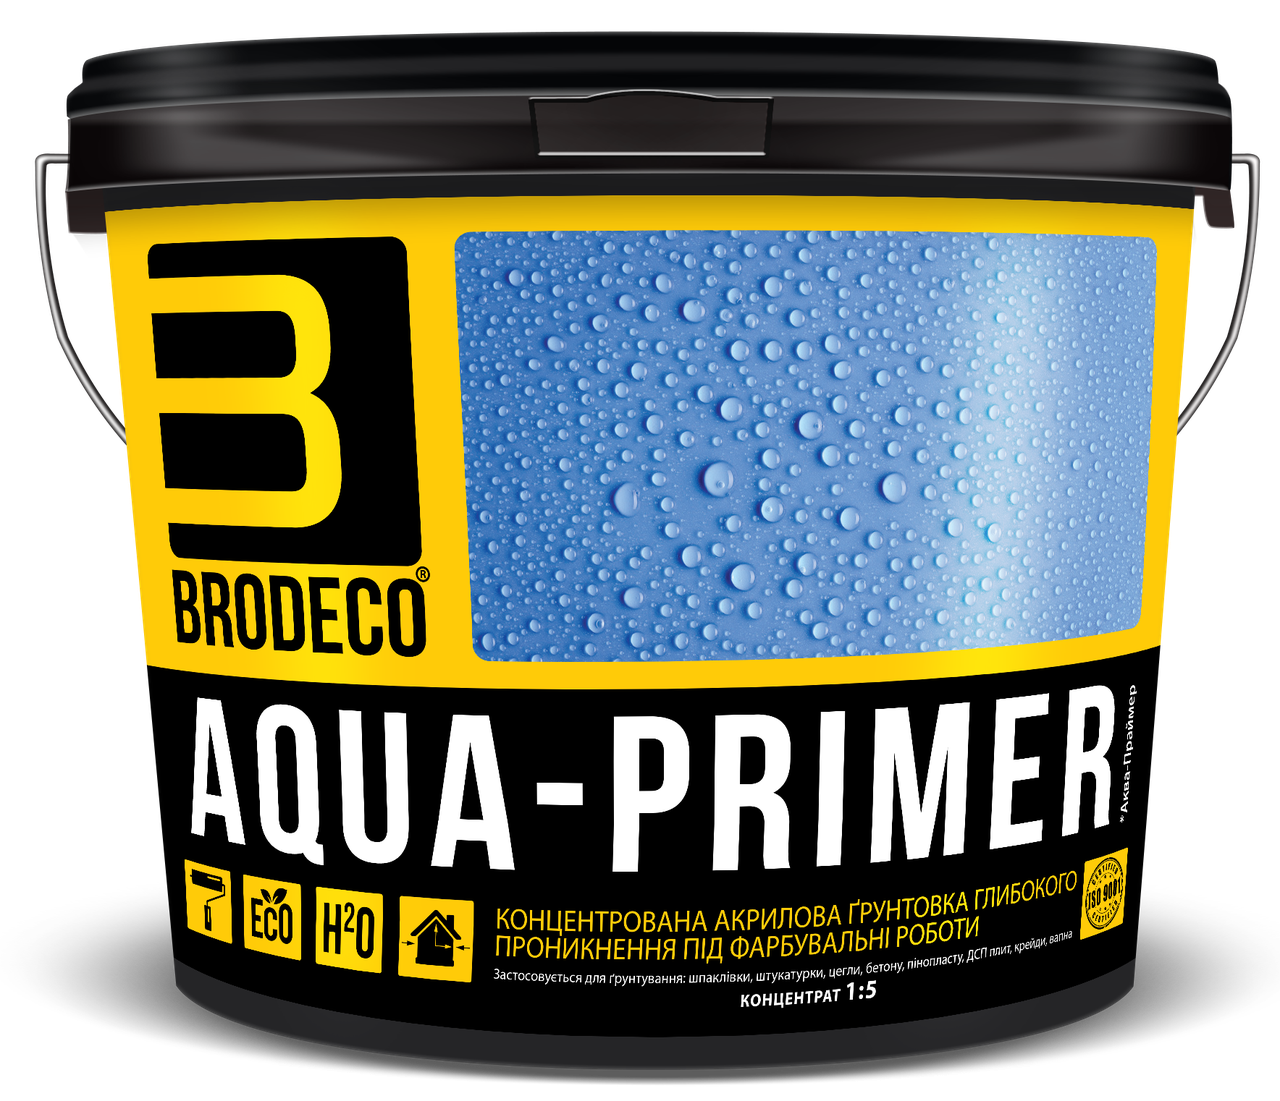 Ґрунтовка глубокого проникнення Brodeco Aqua-Primer концентрована 5 л (E43)